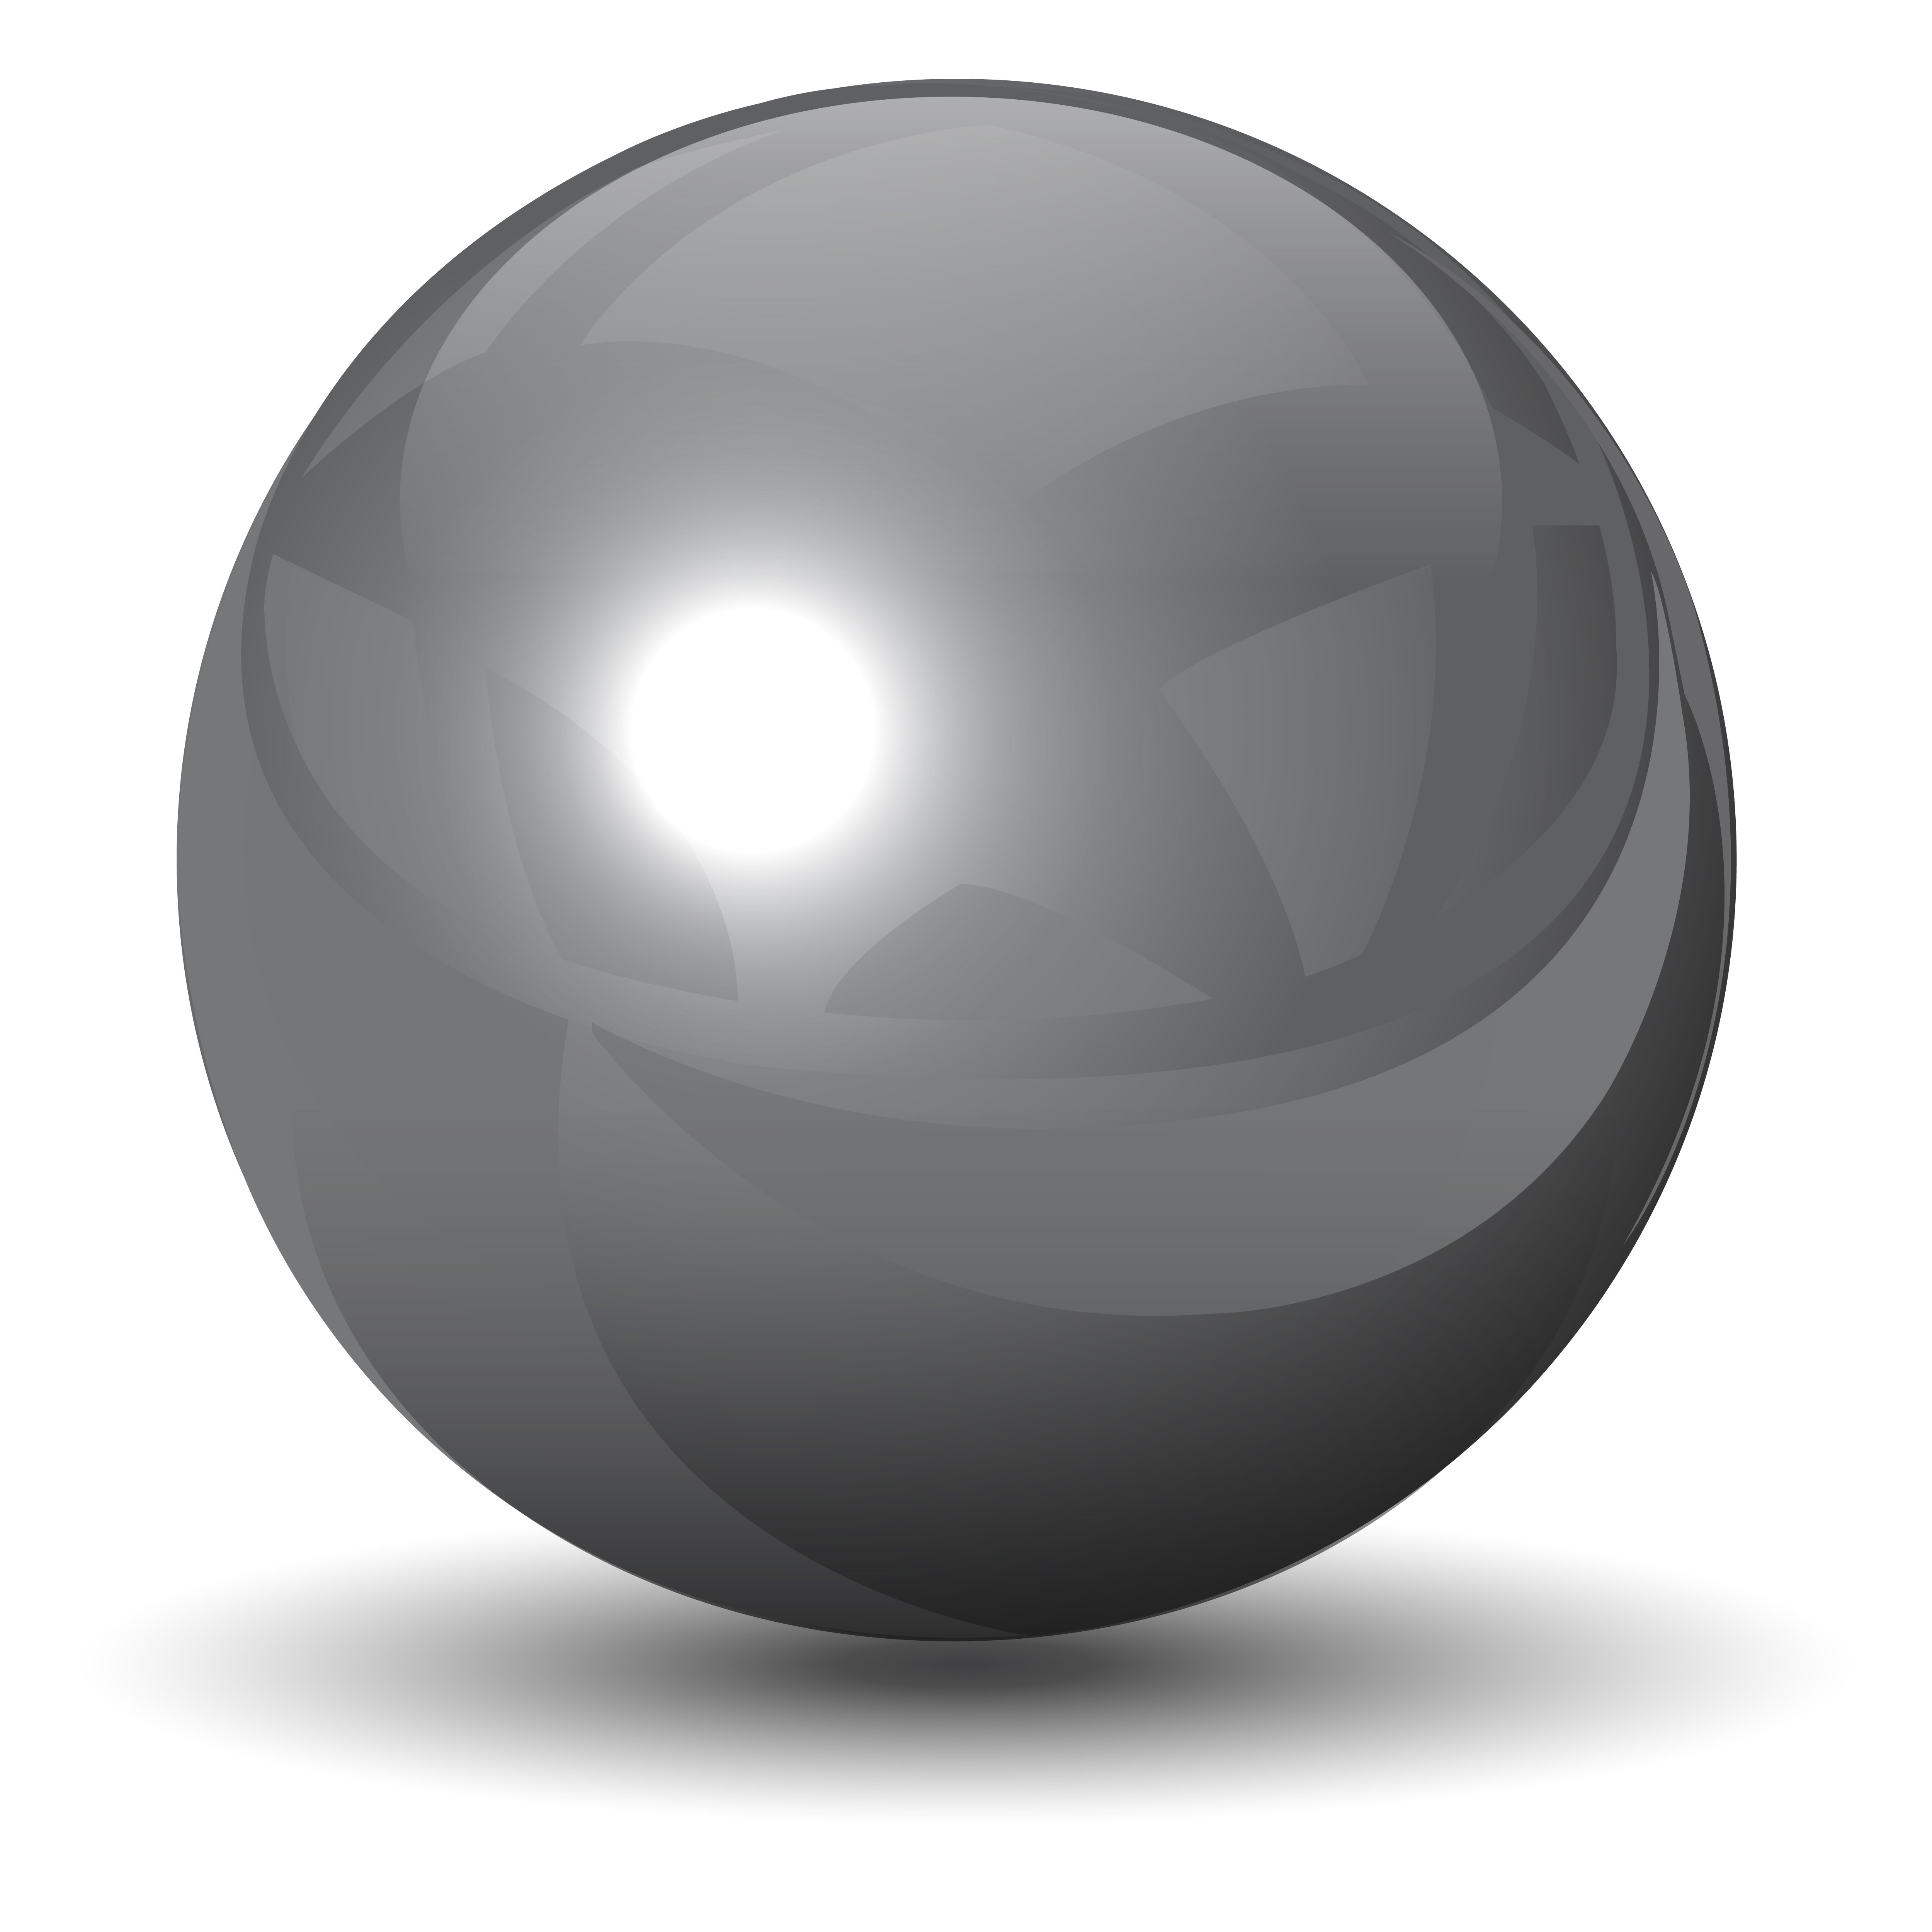 Рисунок на металлическом шаре. Металлический шар. Хромированный металлический шар. Металлическая сфера. Серебряный металлический шарик.